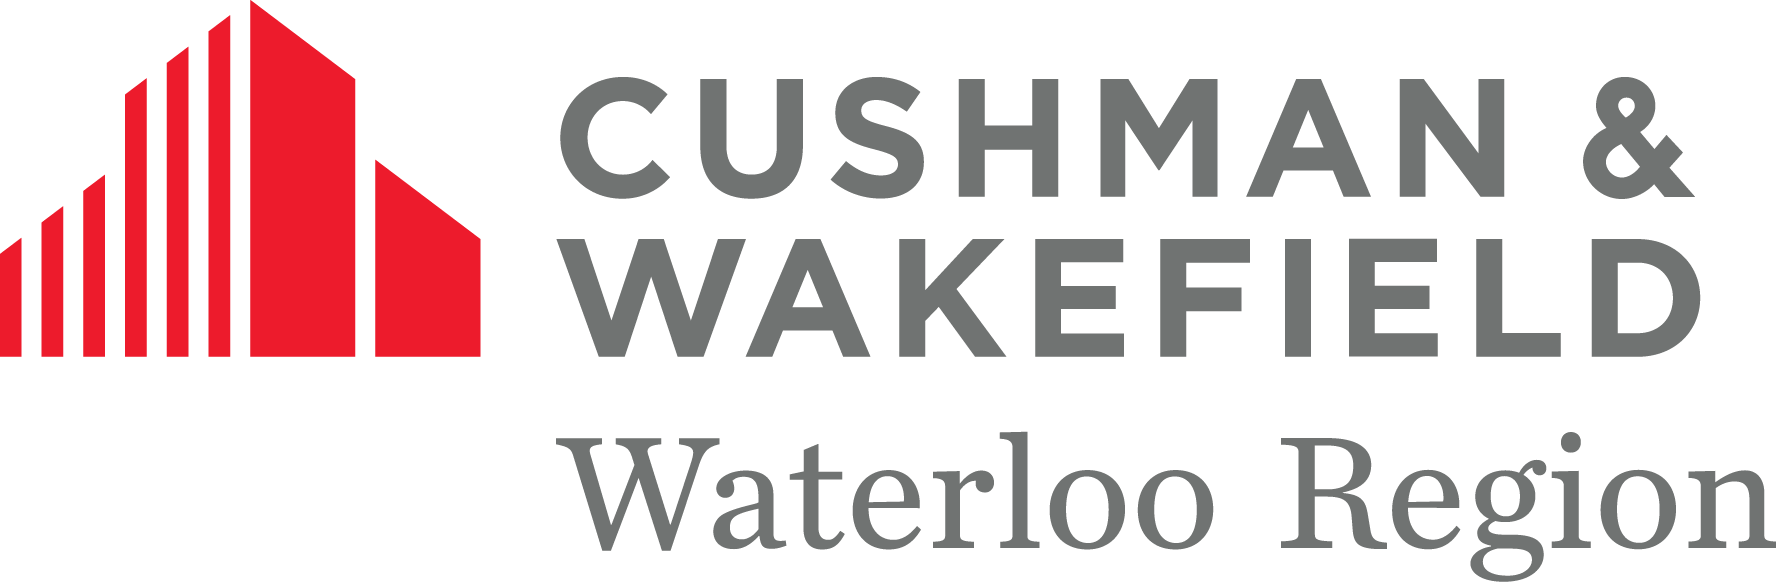 Cushman & Wakefield Waterloo Region Ltd